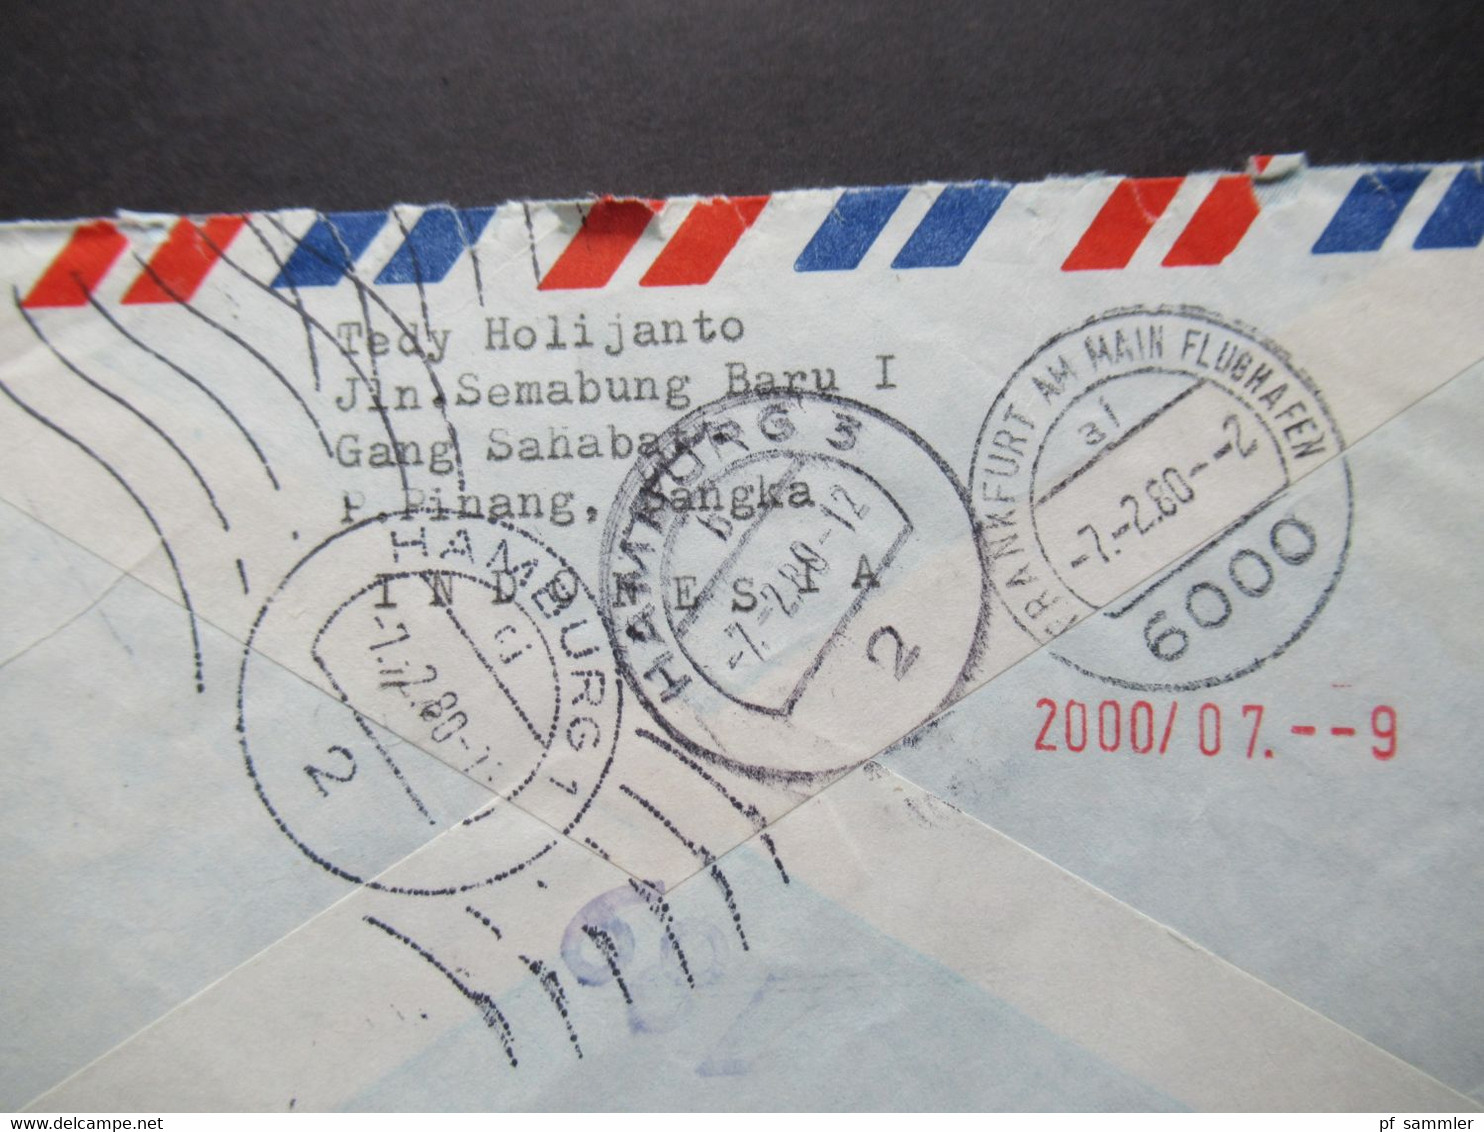 Indonesien 1980 By Air Mail Expres Pinang - Hamburg über Frankfurt Flughafen Rückseitig Weitere Stempel - Indonesië